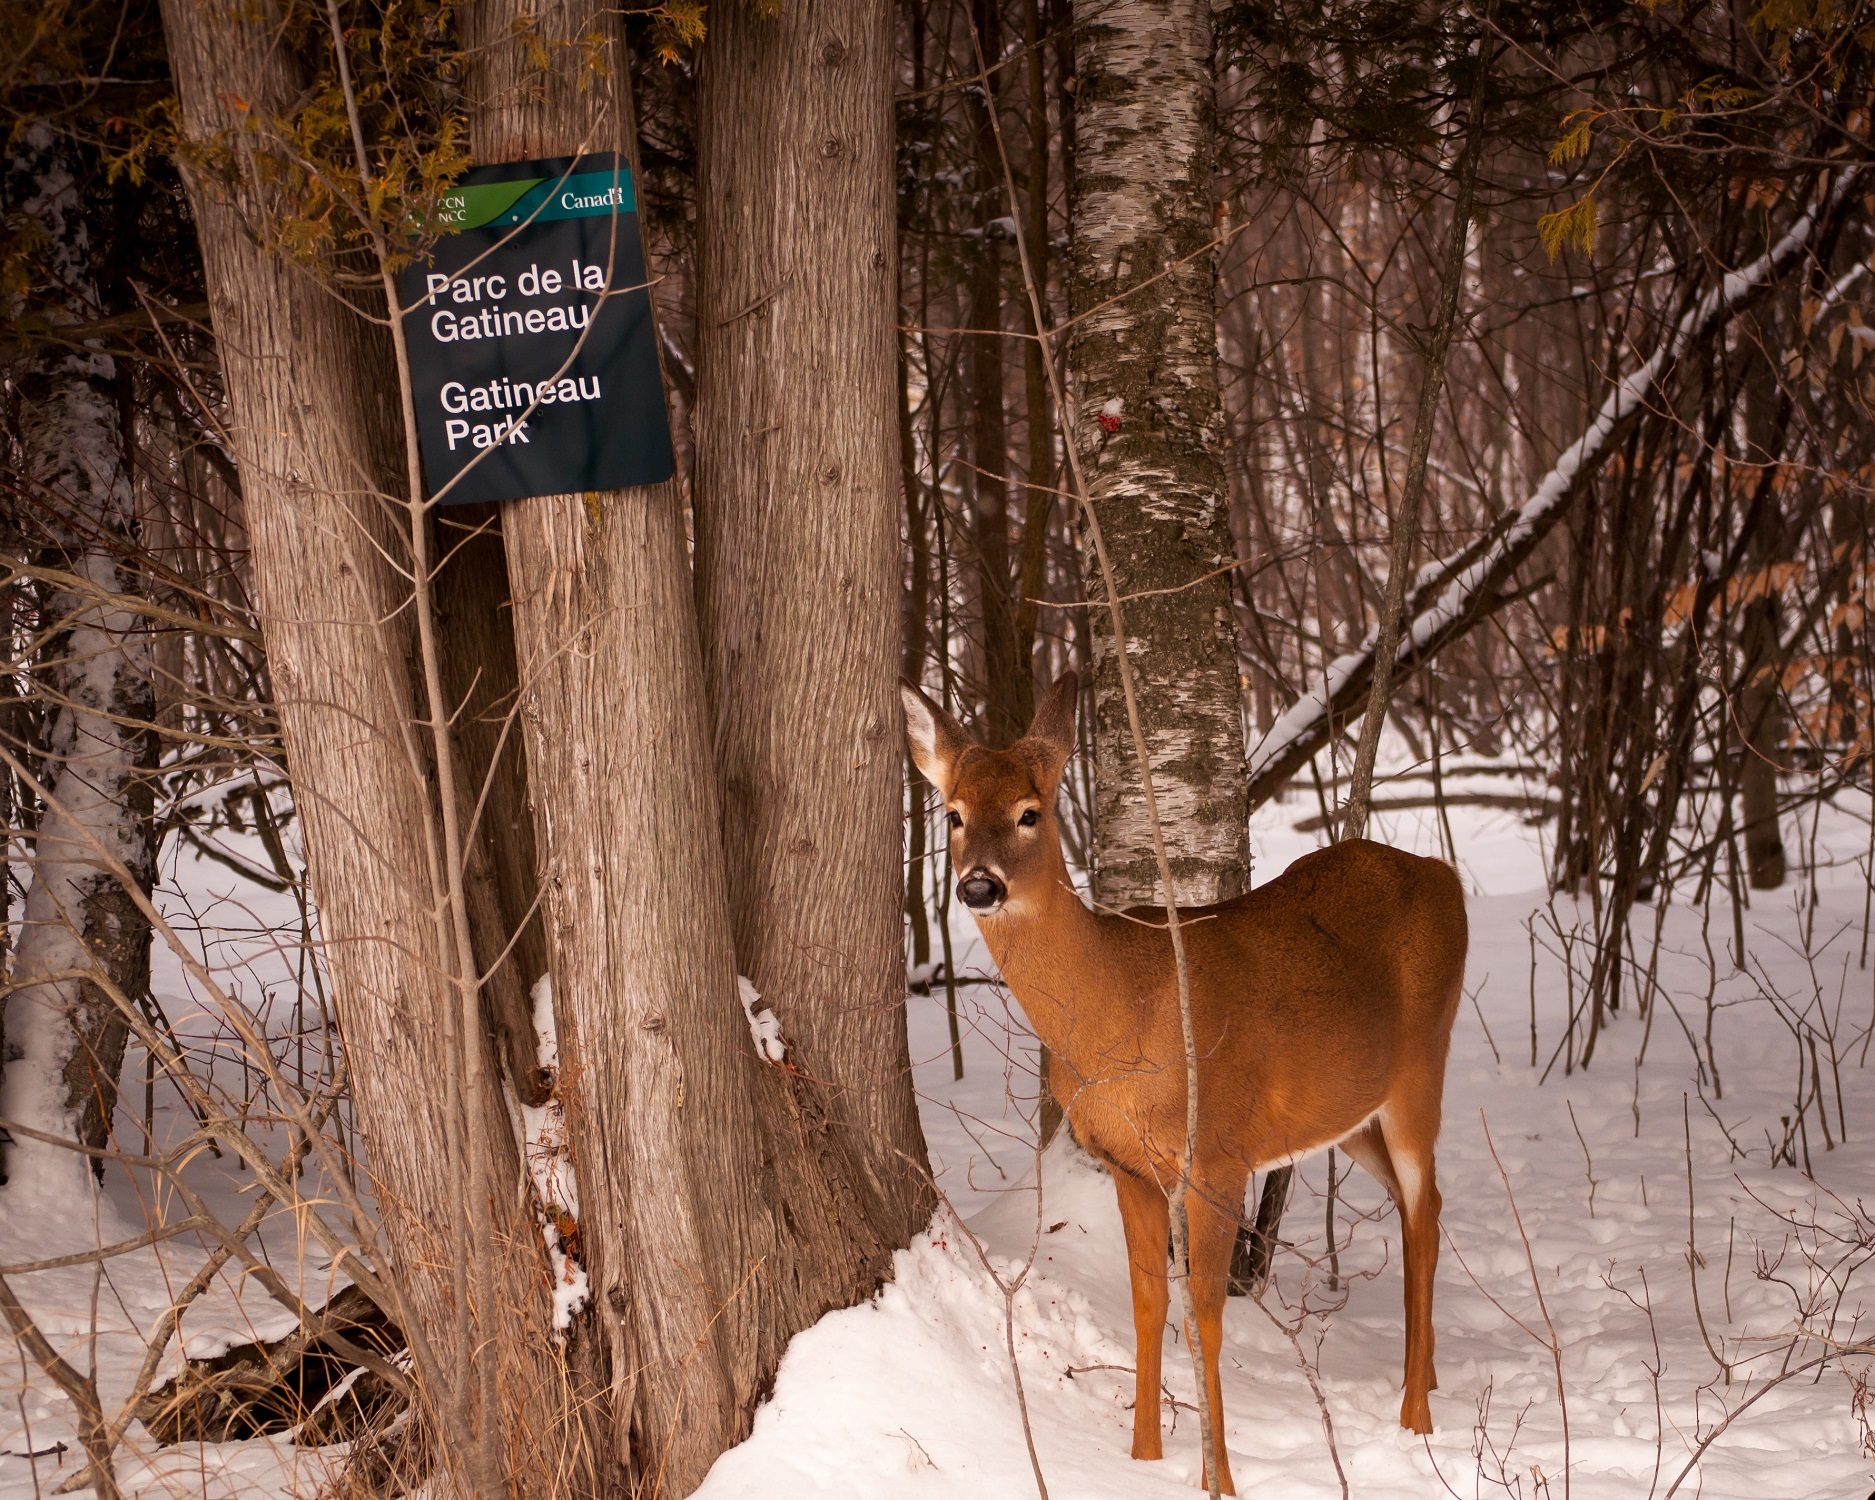 A deer in Gatineau Park in winter